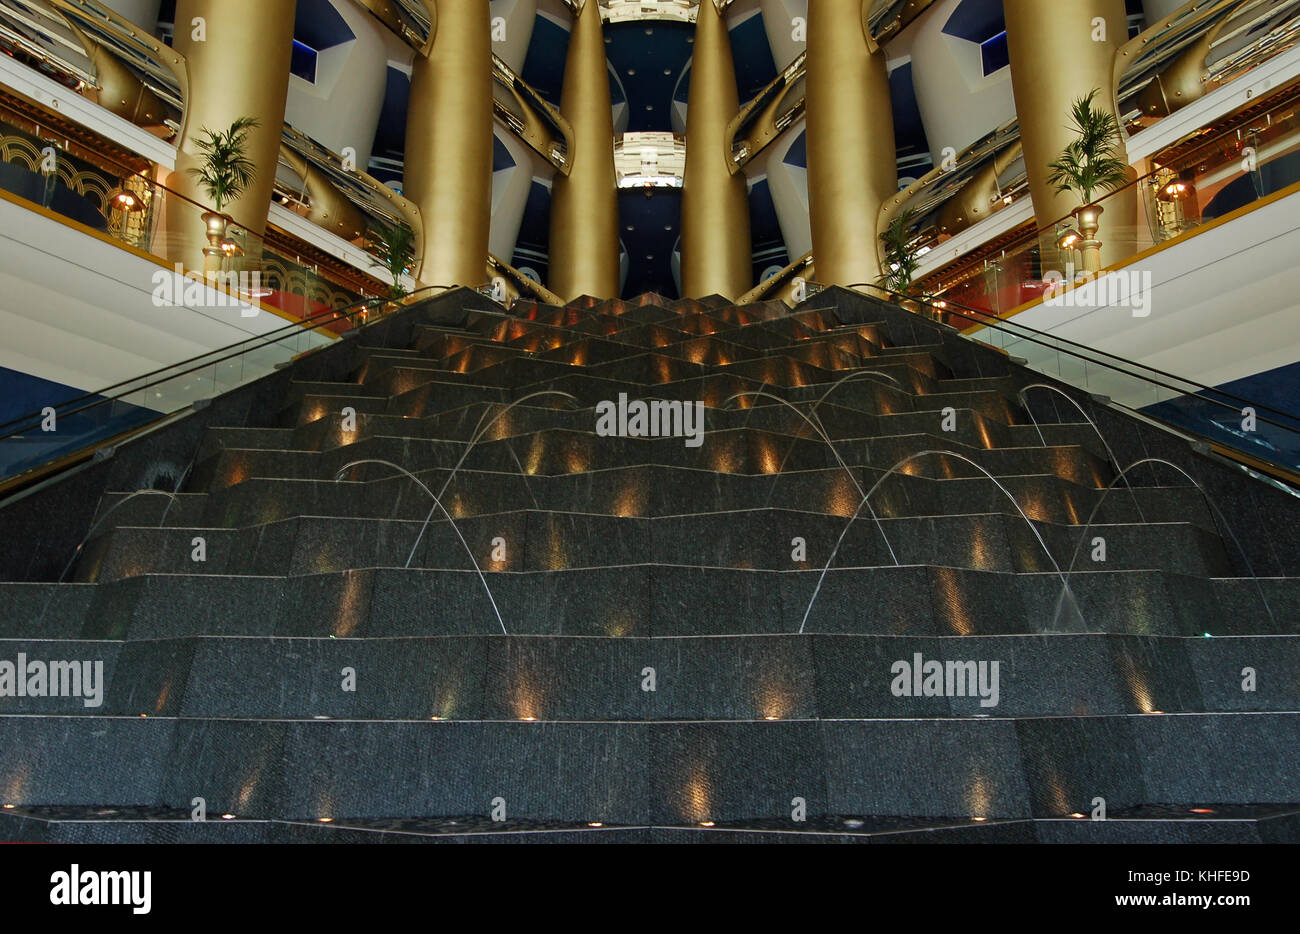 The Massive Fountain Linking the Upper and Lower Lobby in the Burj al Arab Hotel, Dubai, UAE Stock Photo